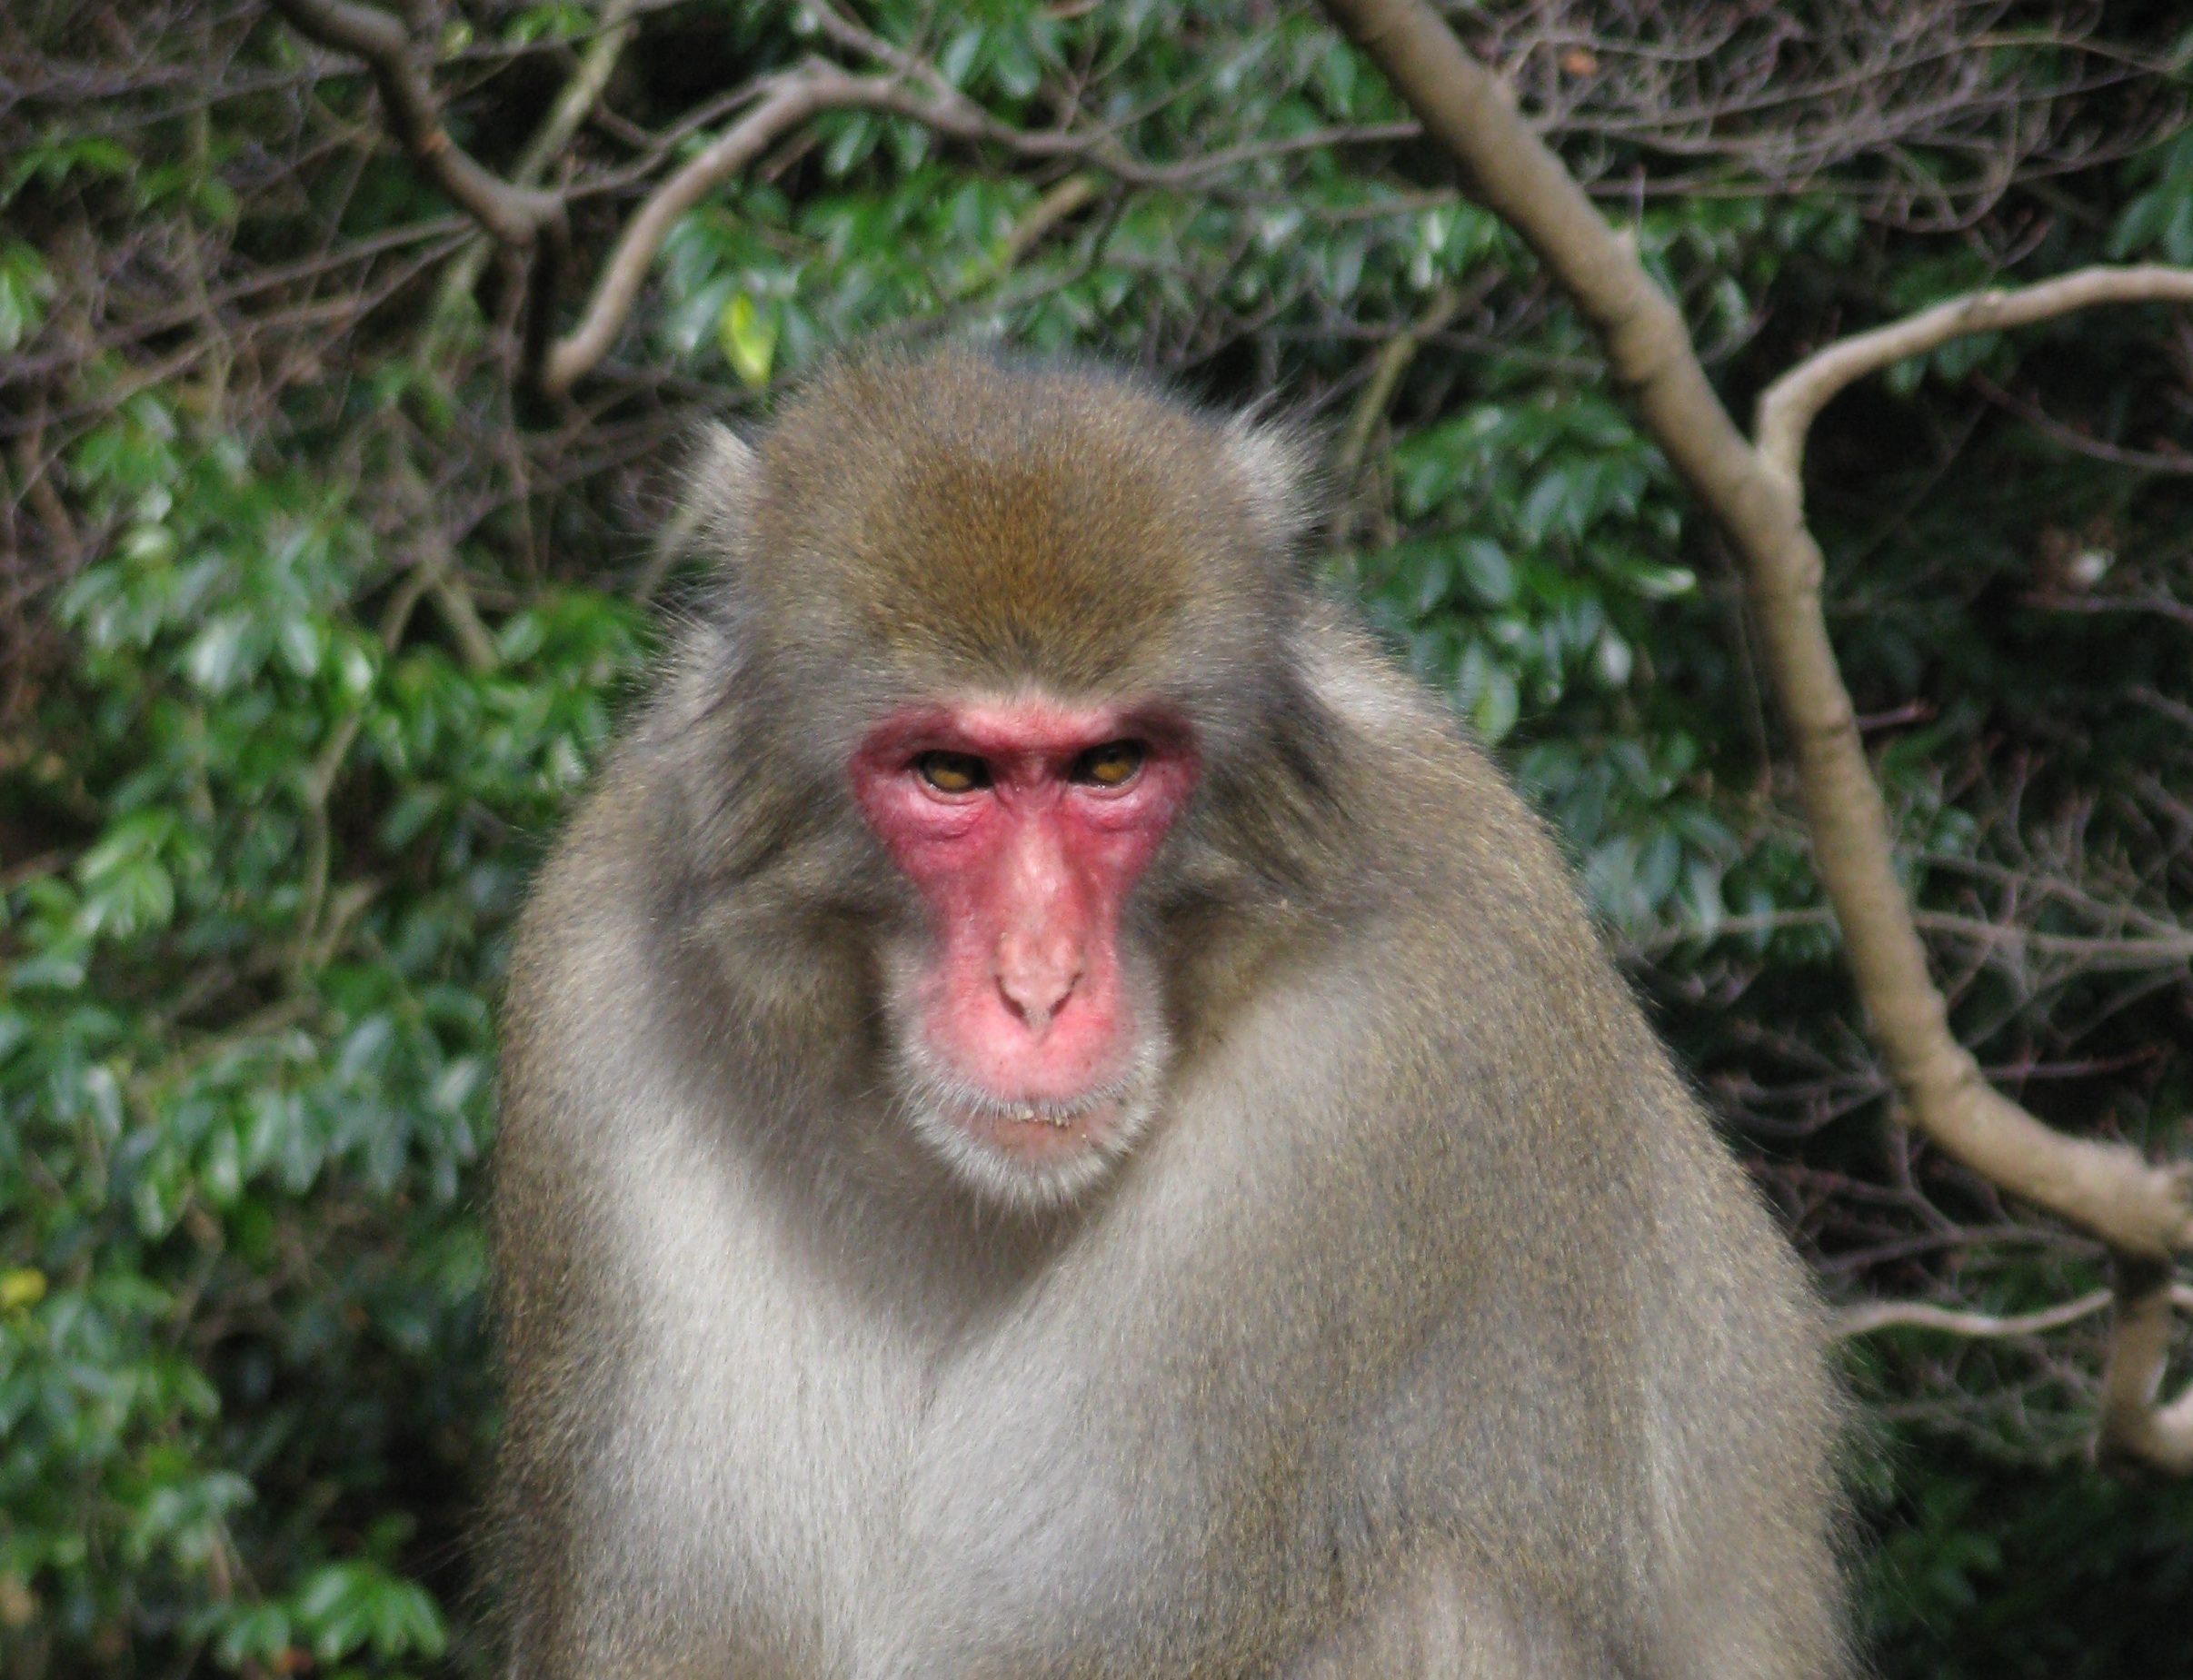 Fukushima Monkeys Have Fewer Blood Cells Than Monkeys Elsewhere, Study Finds